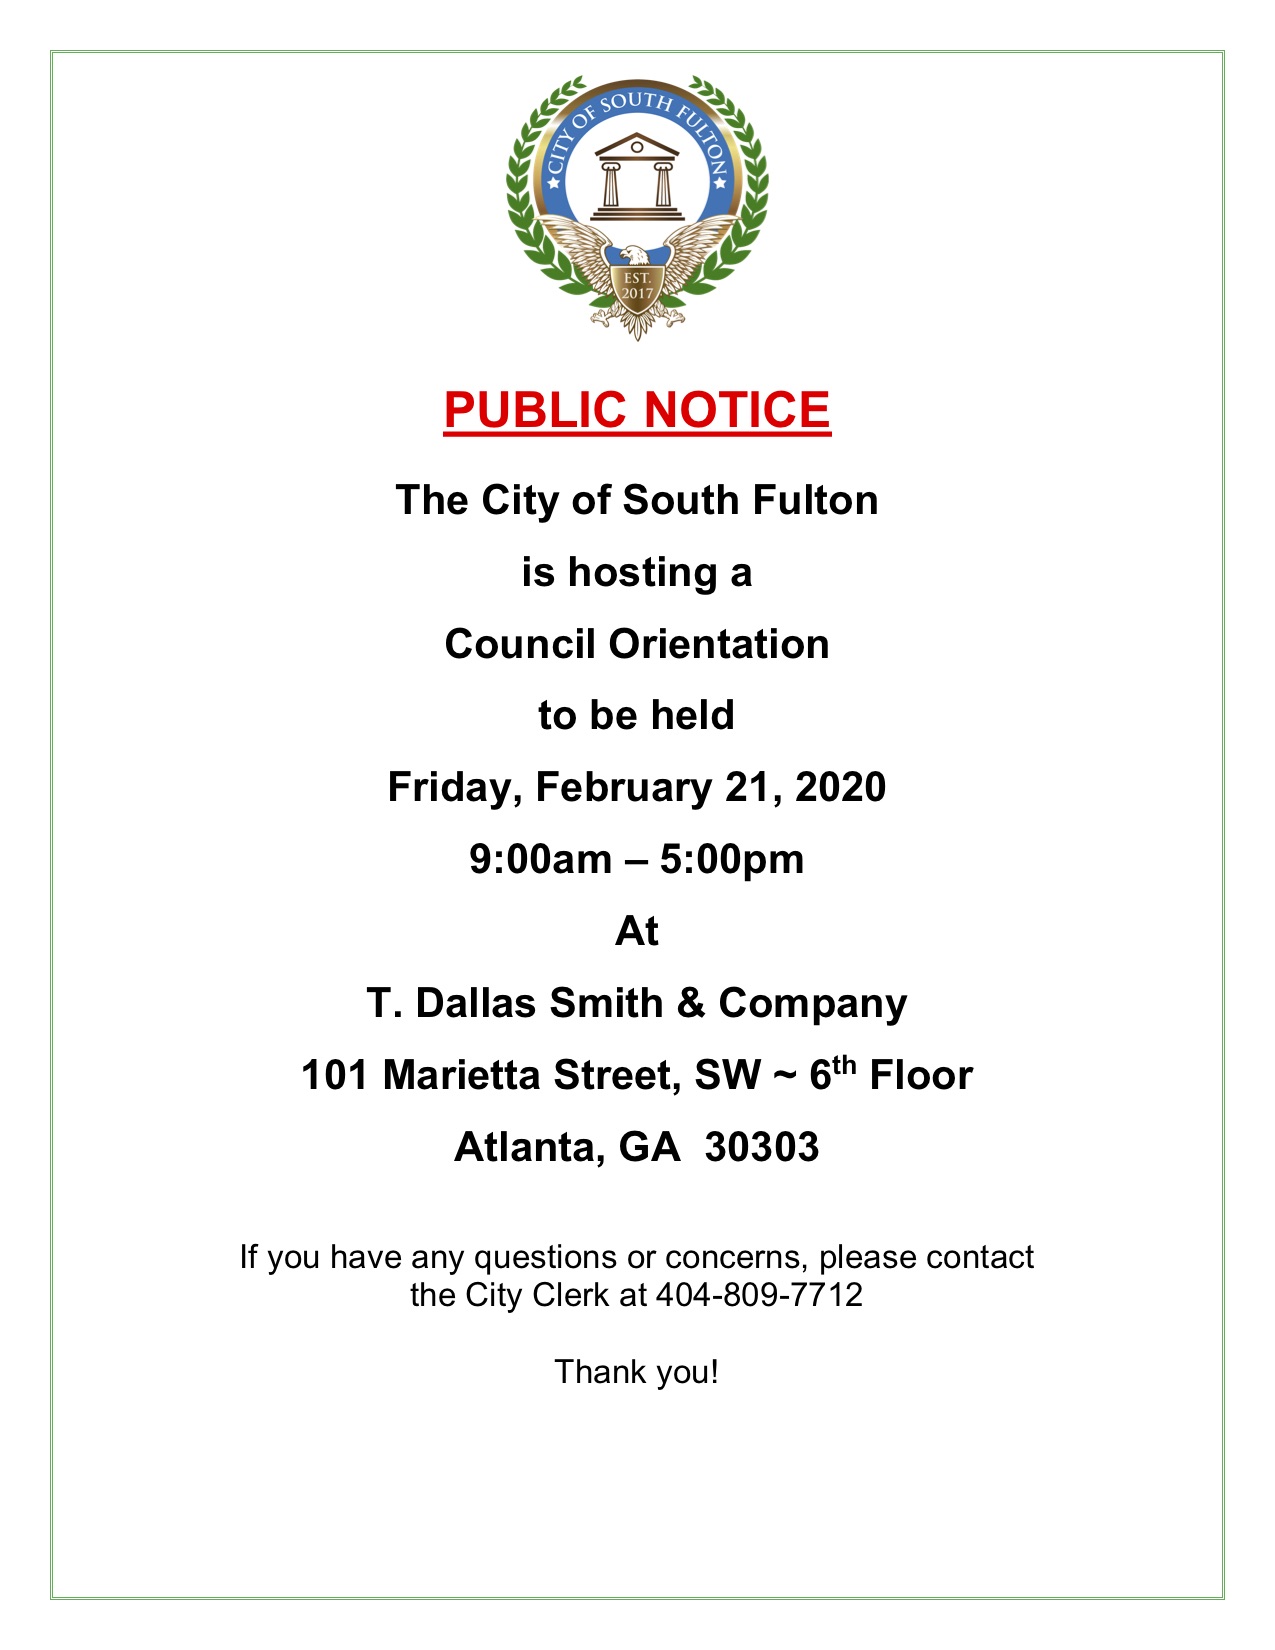 City of South Fulton Council Orientation